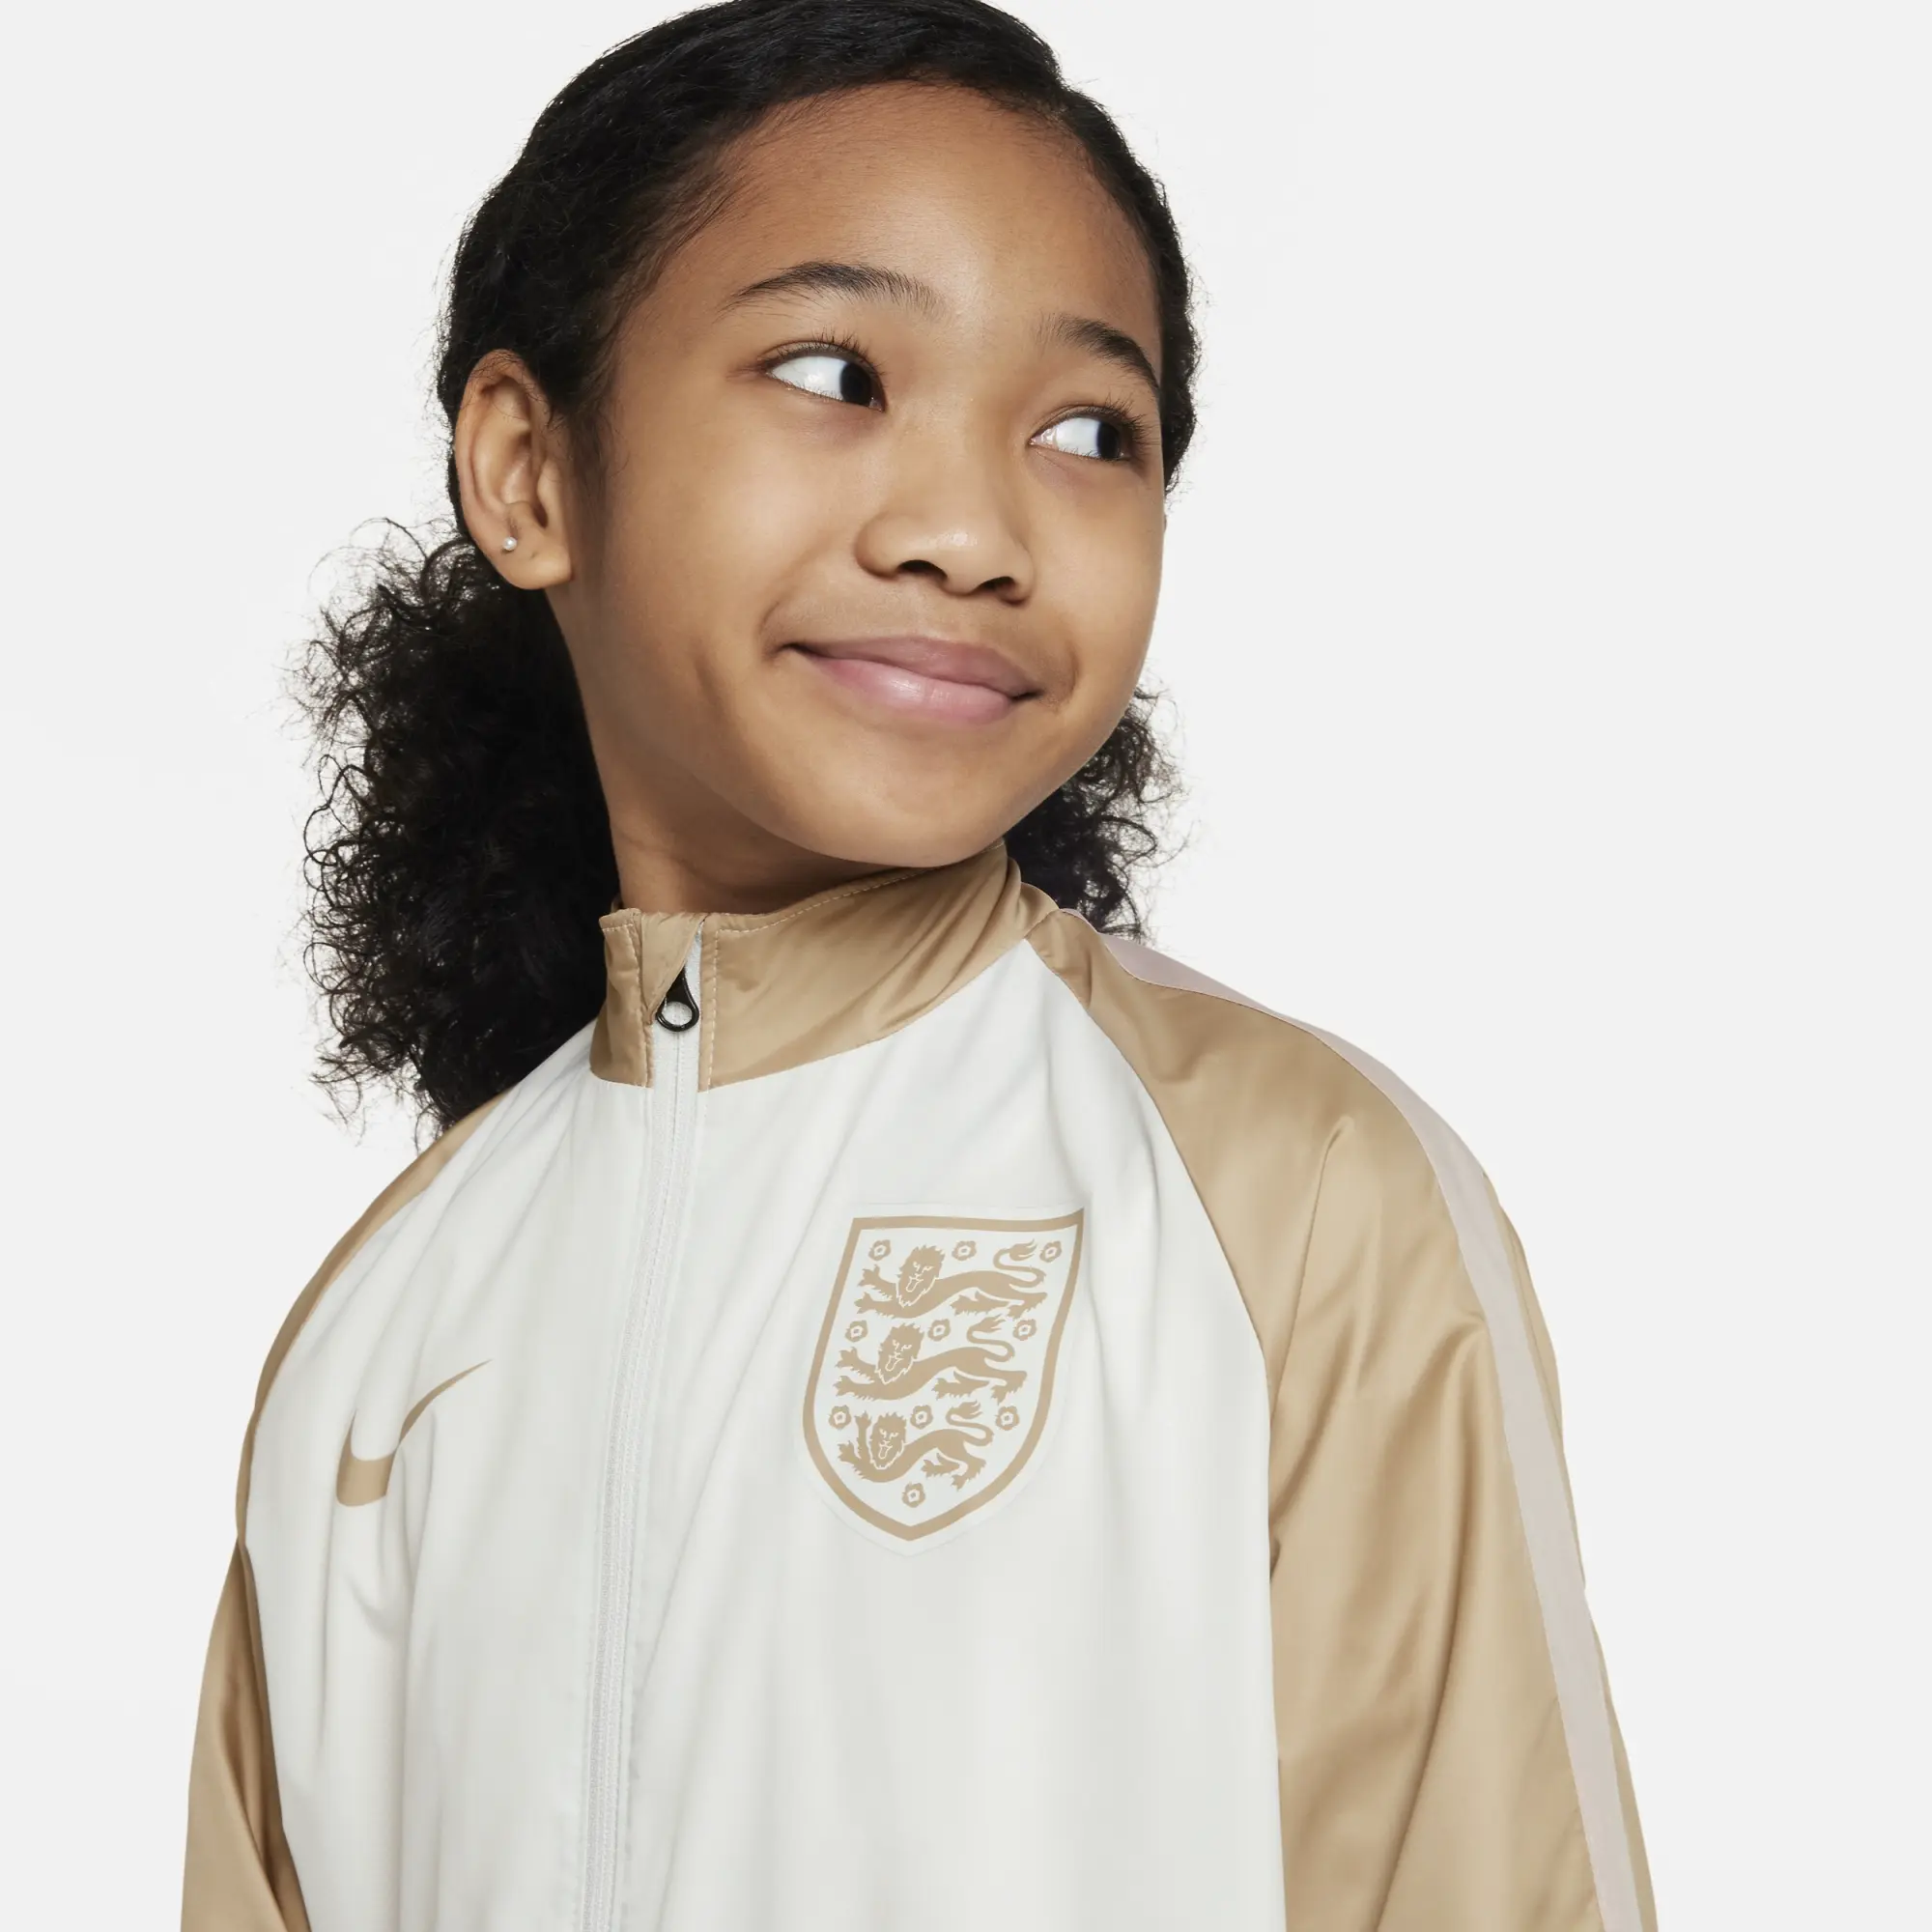 England Women's Nike Academy Jacket - White - Kids